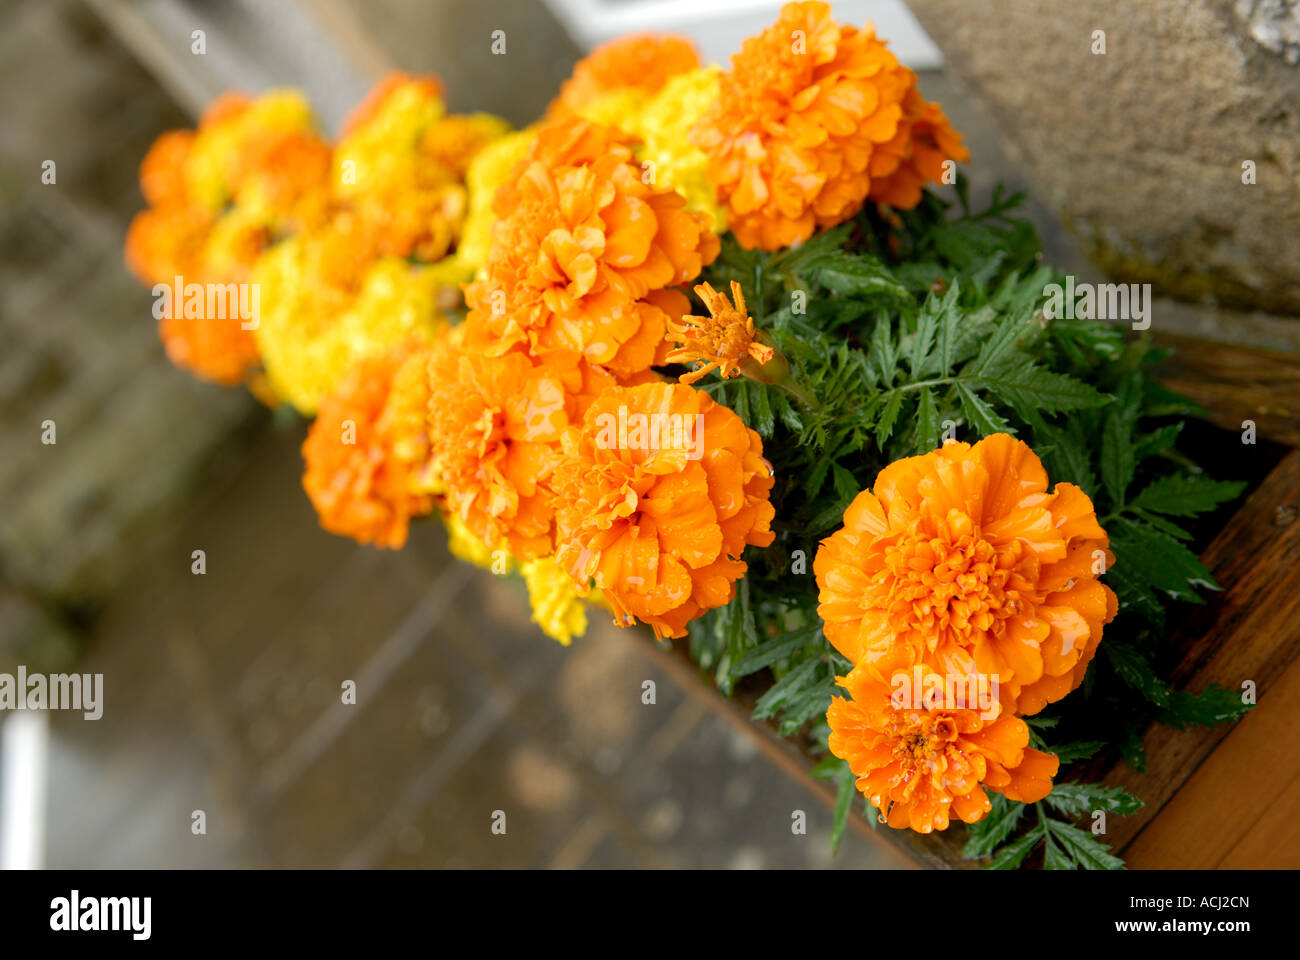 French marigolds. Stock Photo